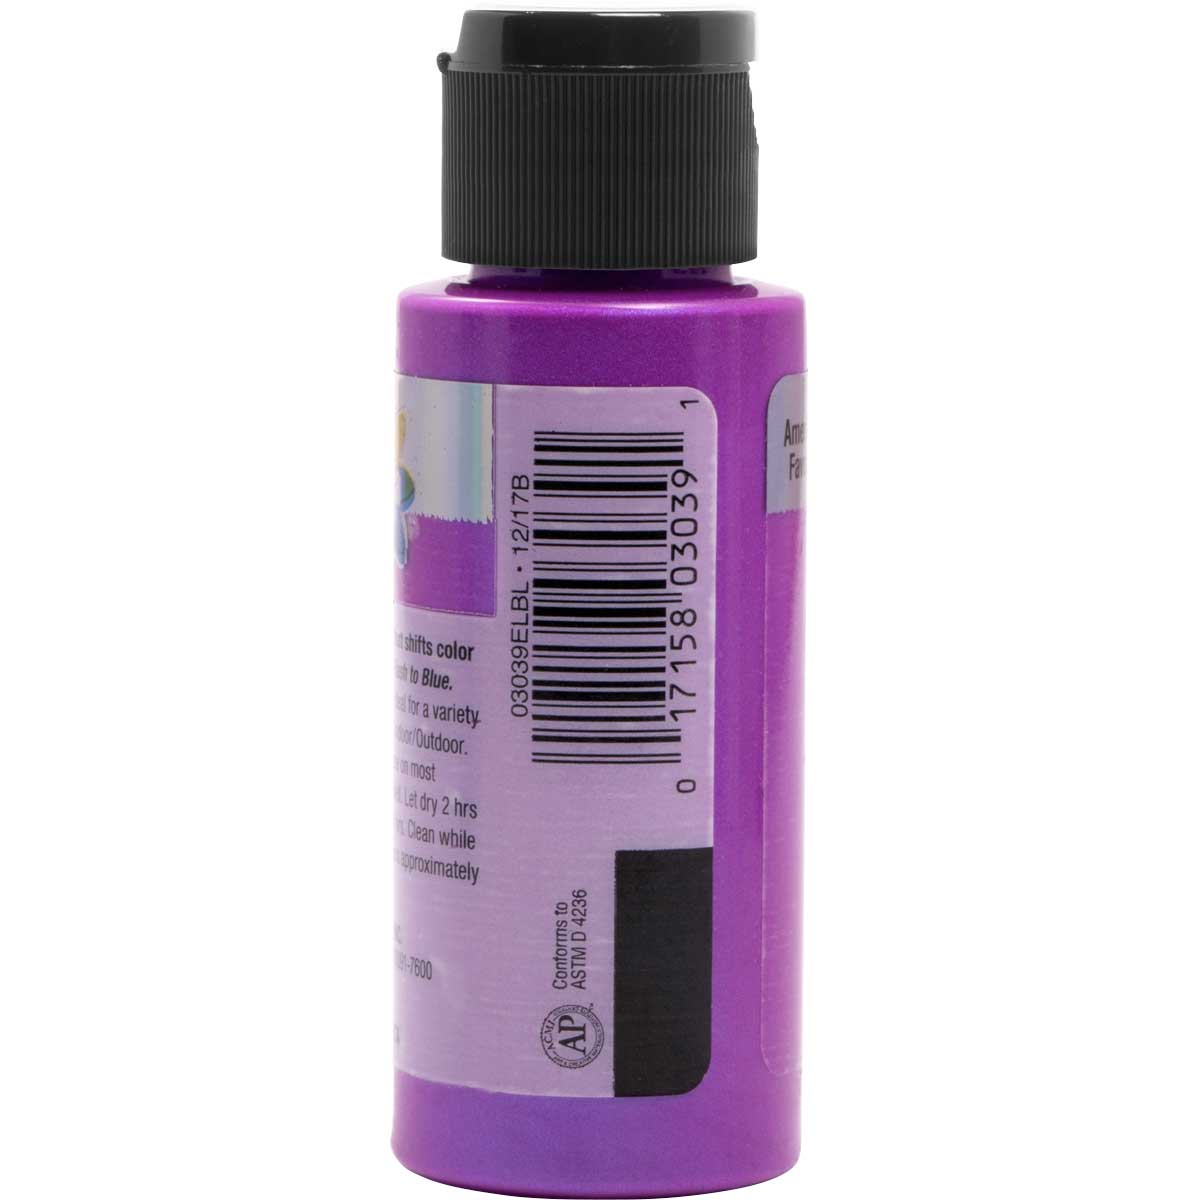 Delta Ceramcoat ® Acrylic Paint - Flash Metallic Purple, 2 oz. - 03039